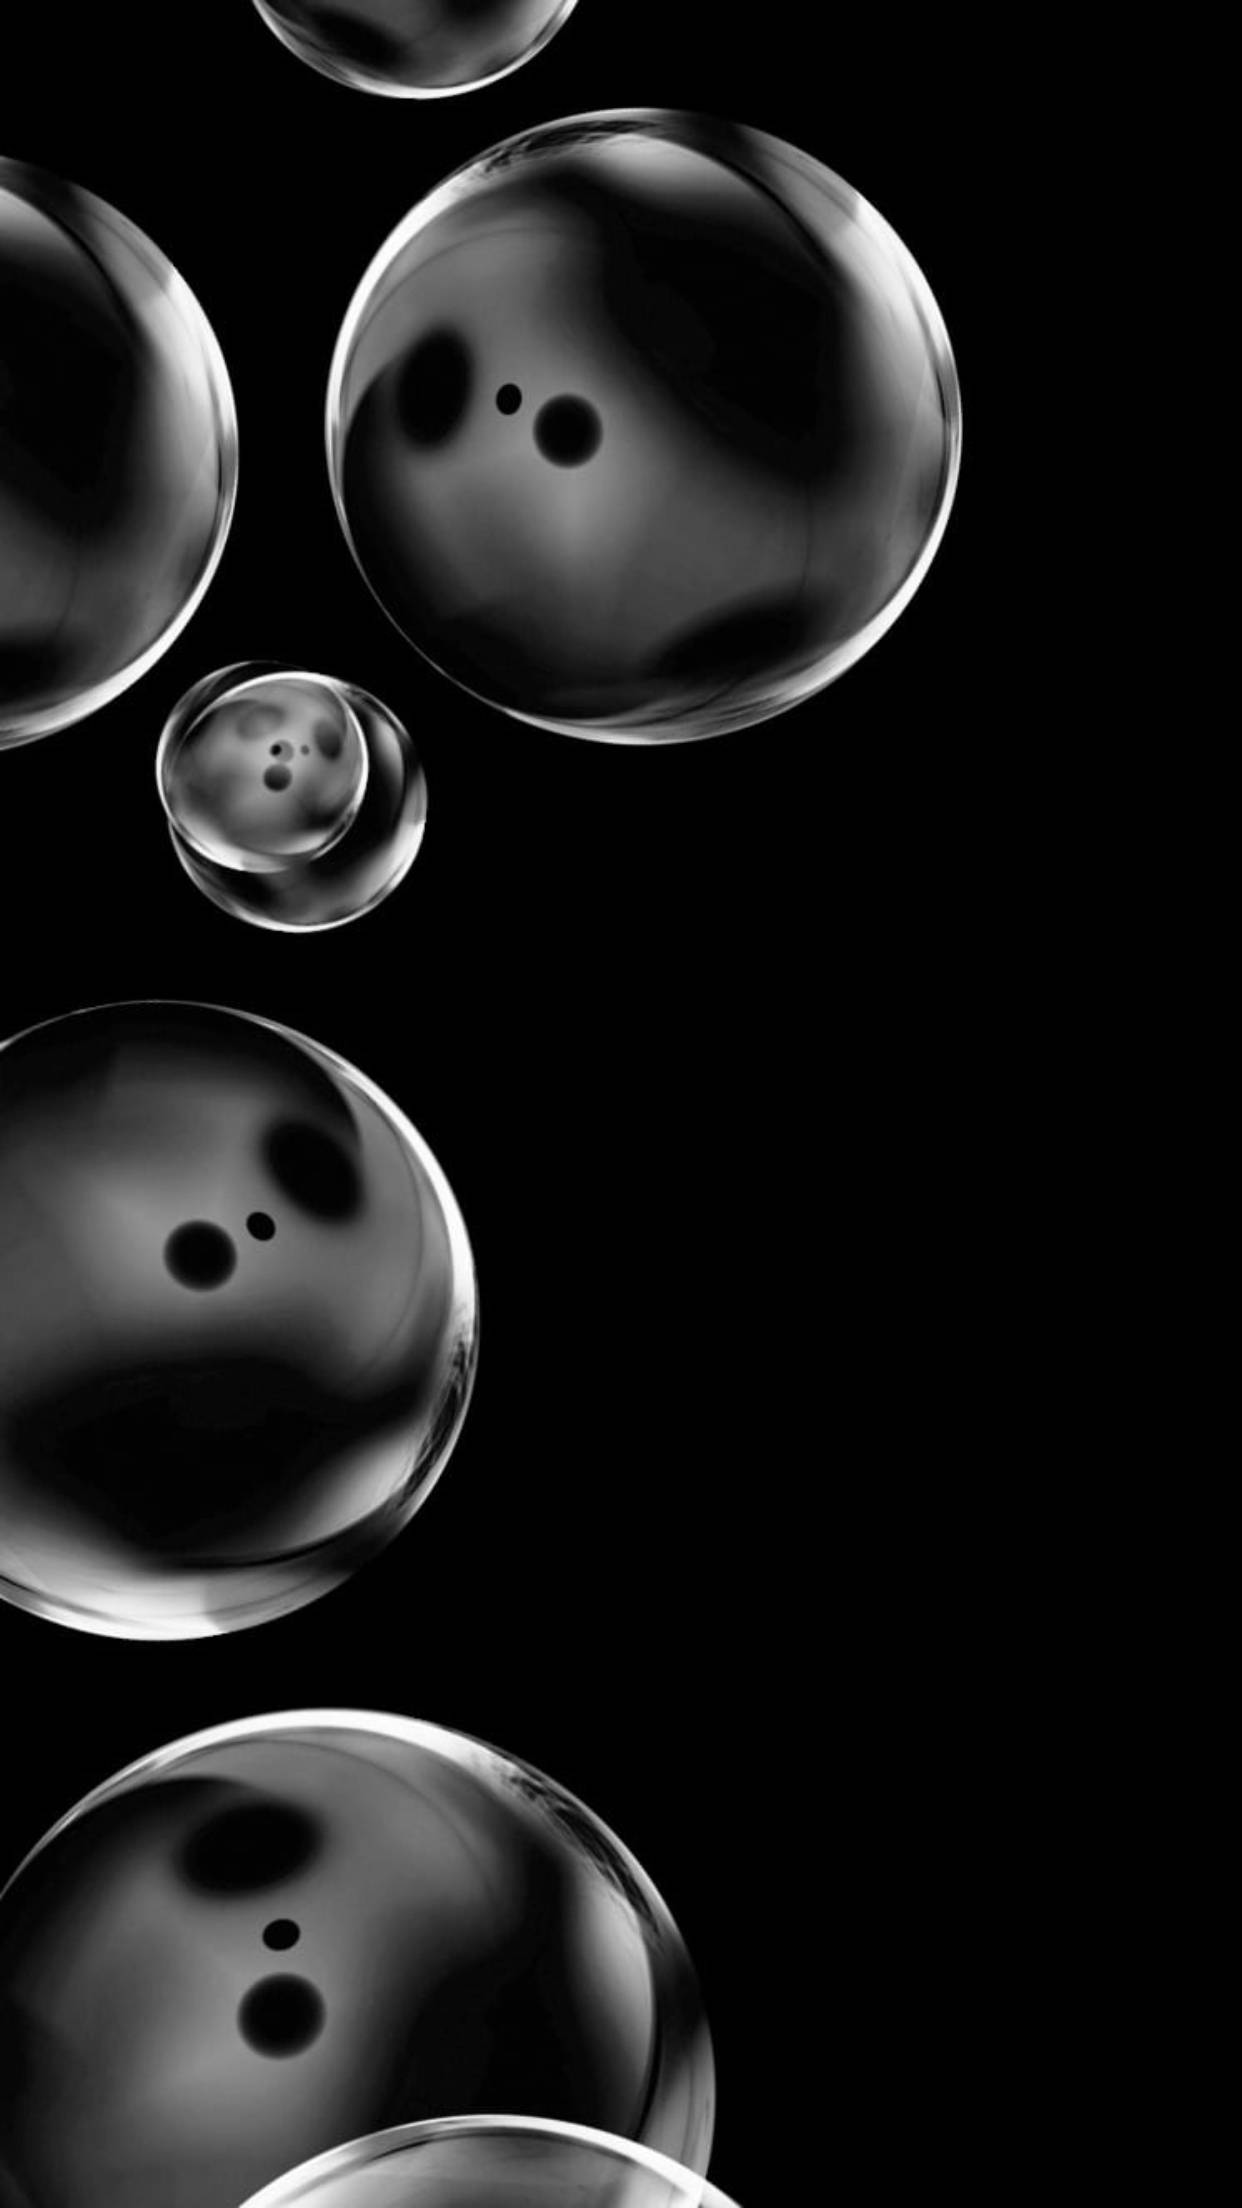 Aesthetic Bubbles On Black Iphone 6 Plus Wallpaper